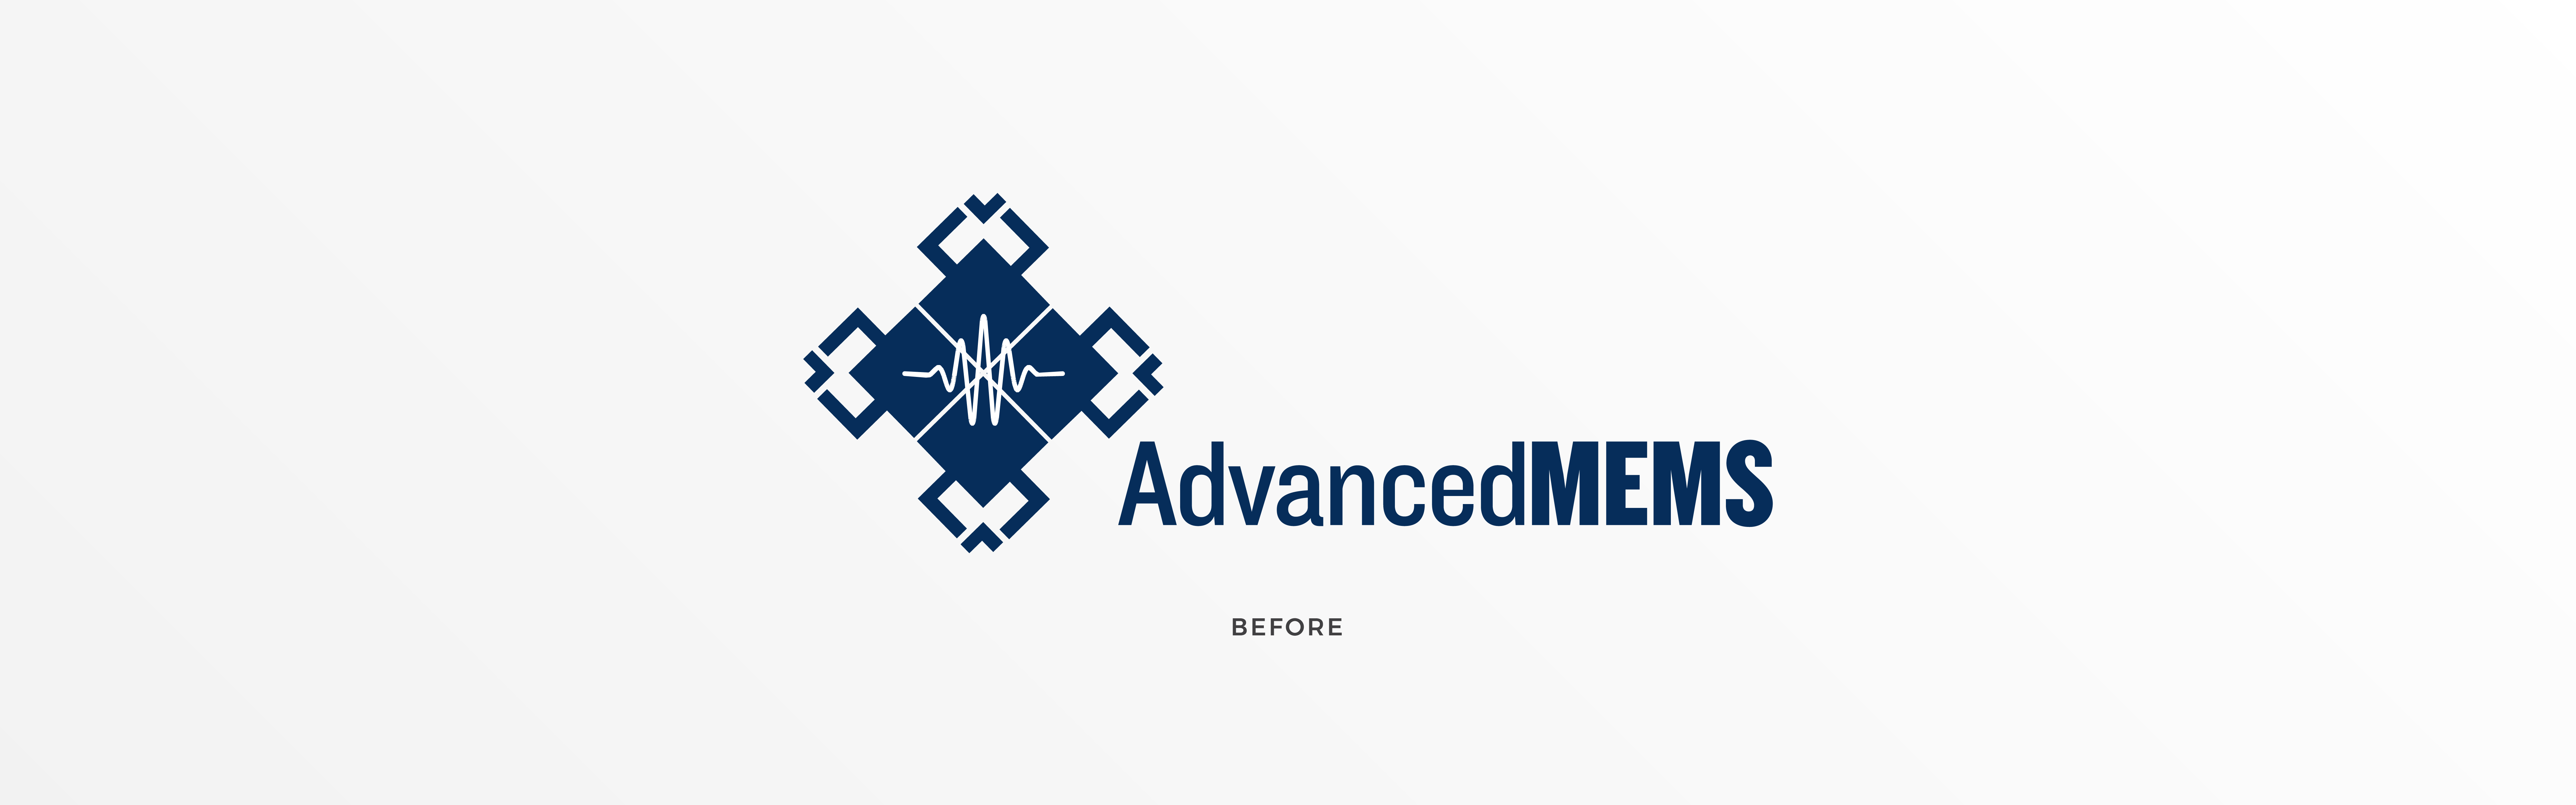 AdvancedMEMS logo before